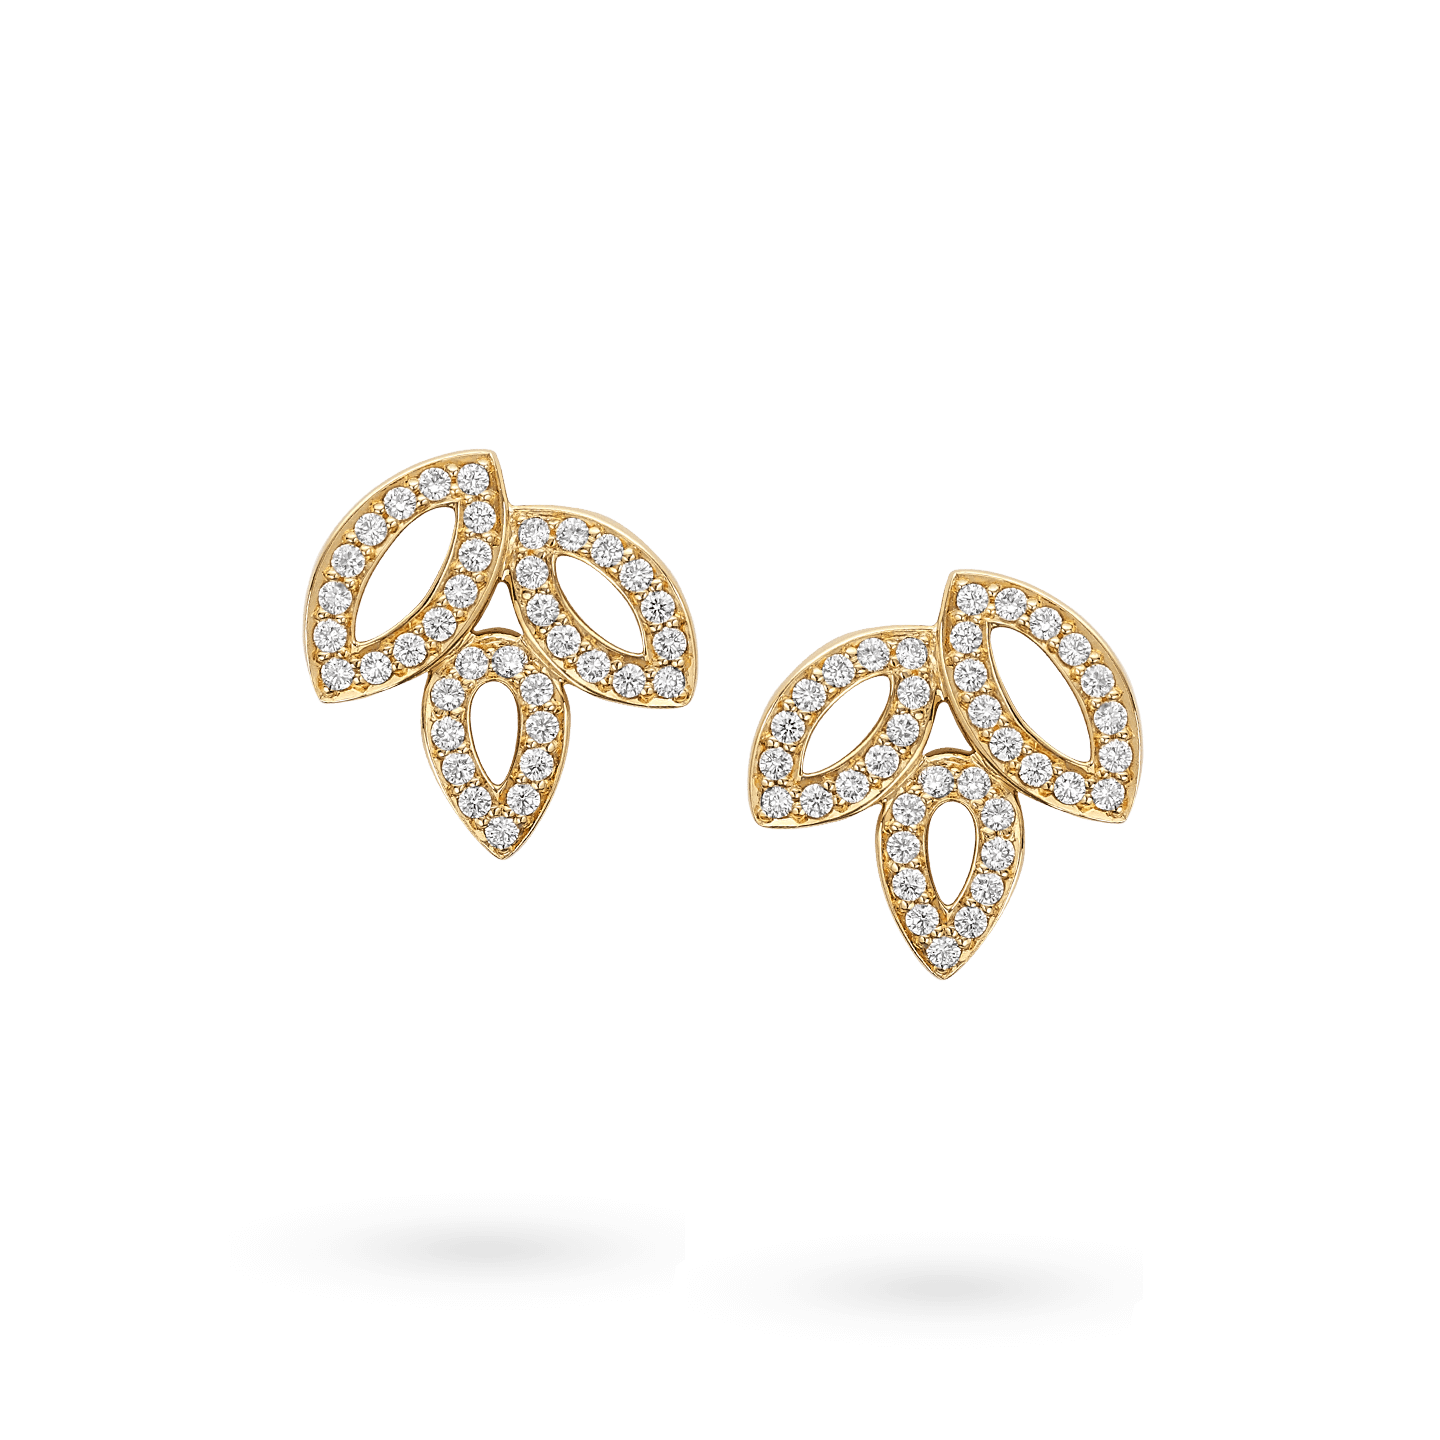 Bonhams : A pair of emerald and diamond earrings, by Harry Winston